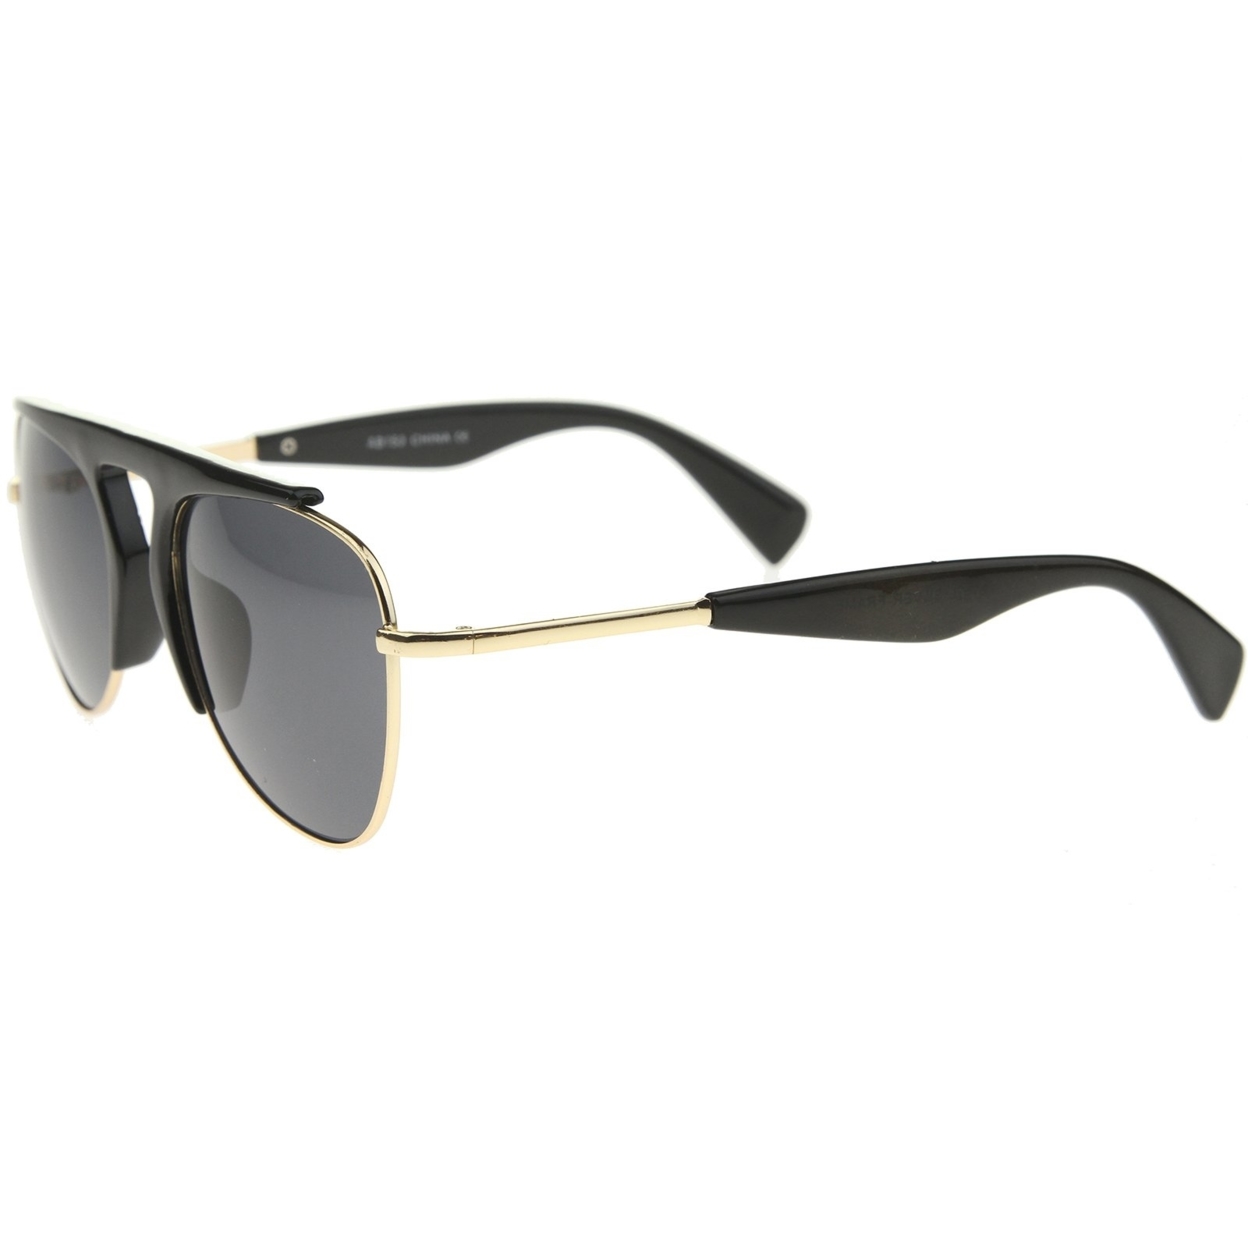 Modern Oversize Semi-Rimless Frame Teardrop Lens Aviator Sunglasses 57mm - Tortoise-Gold / Smoke